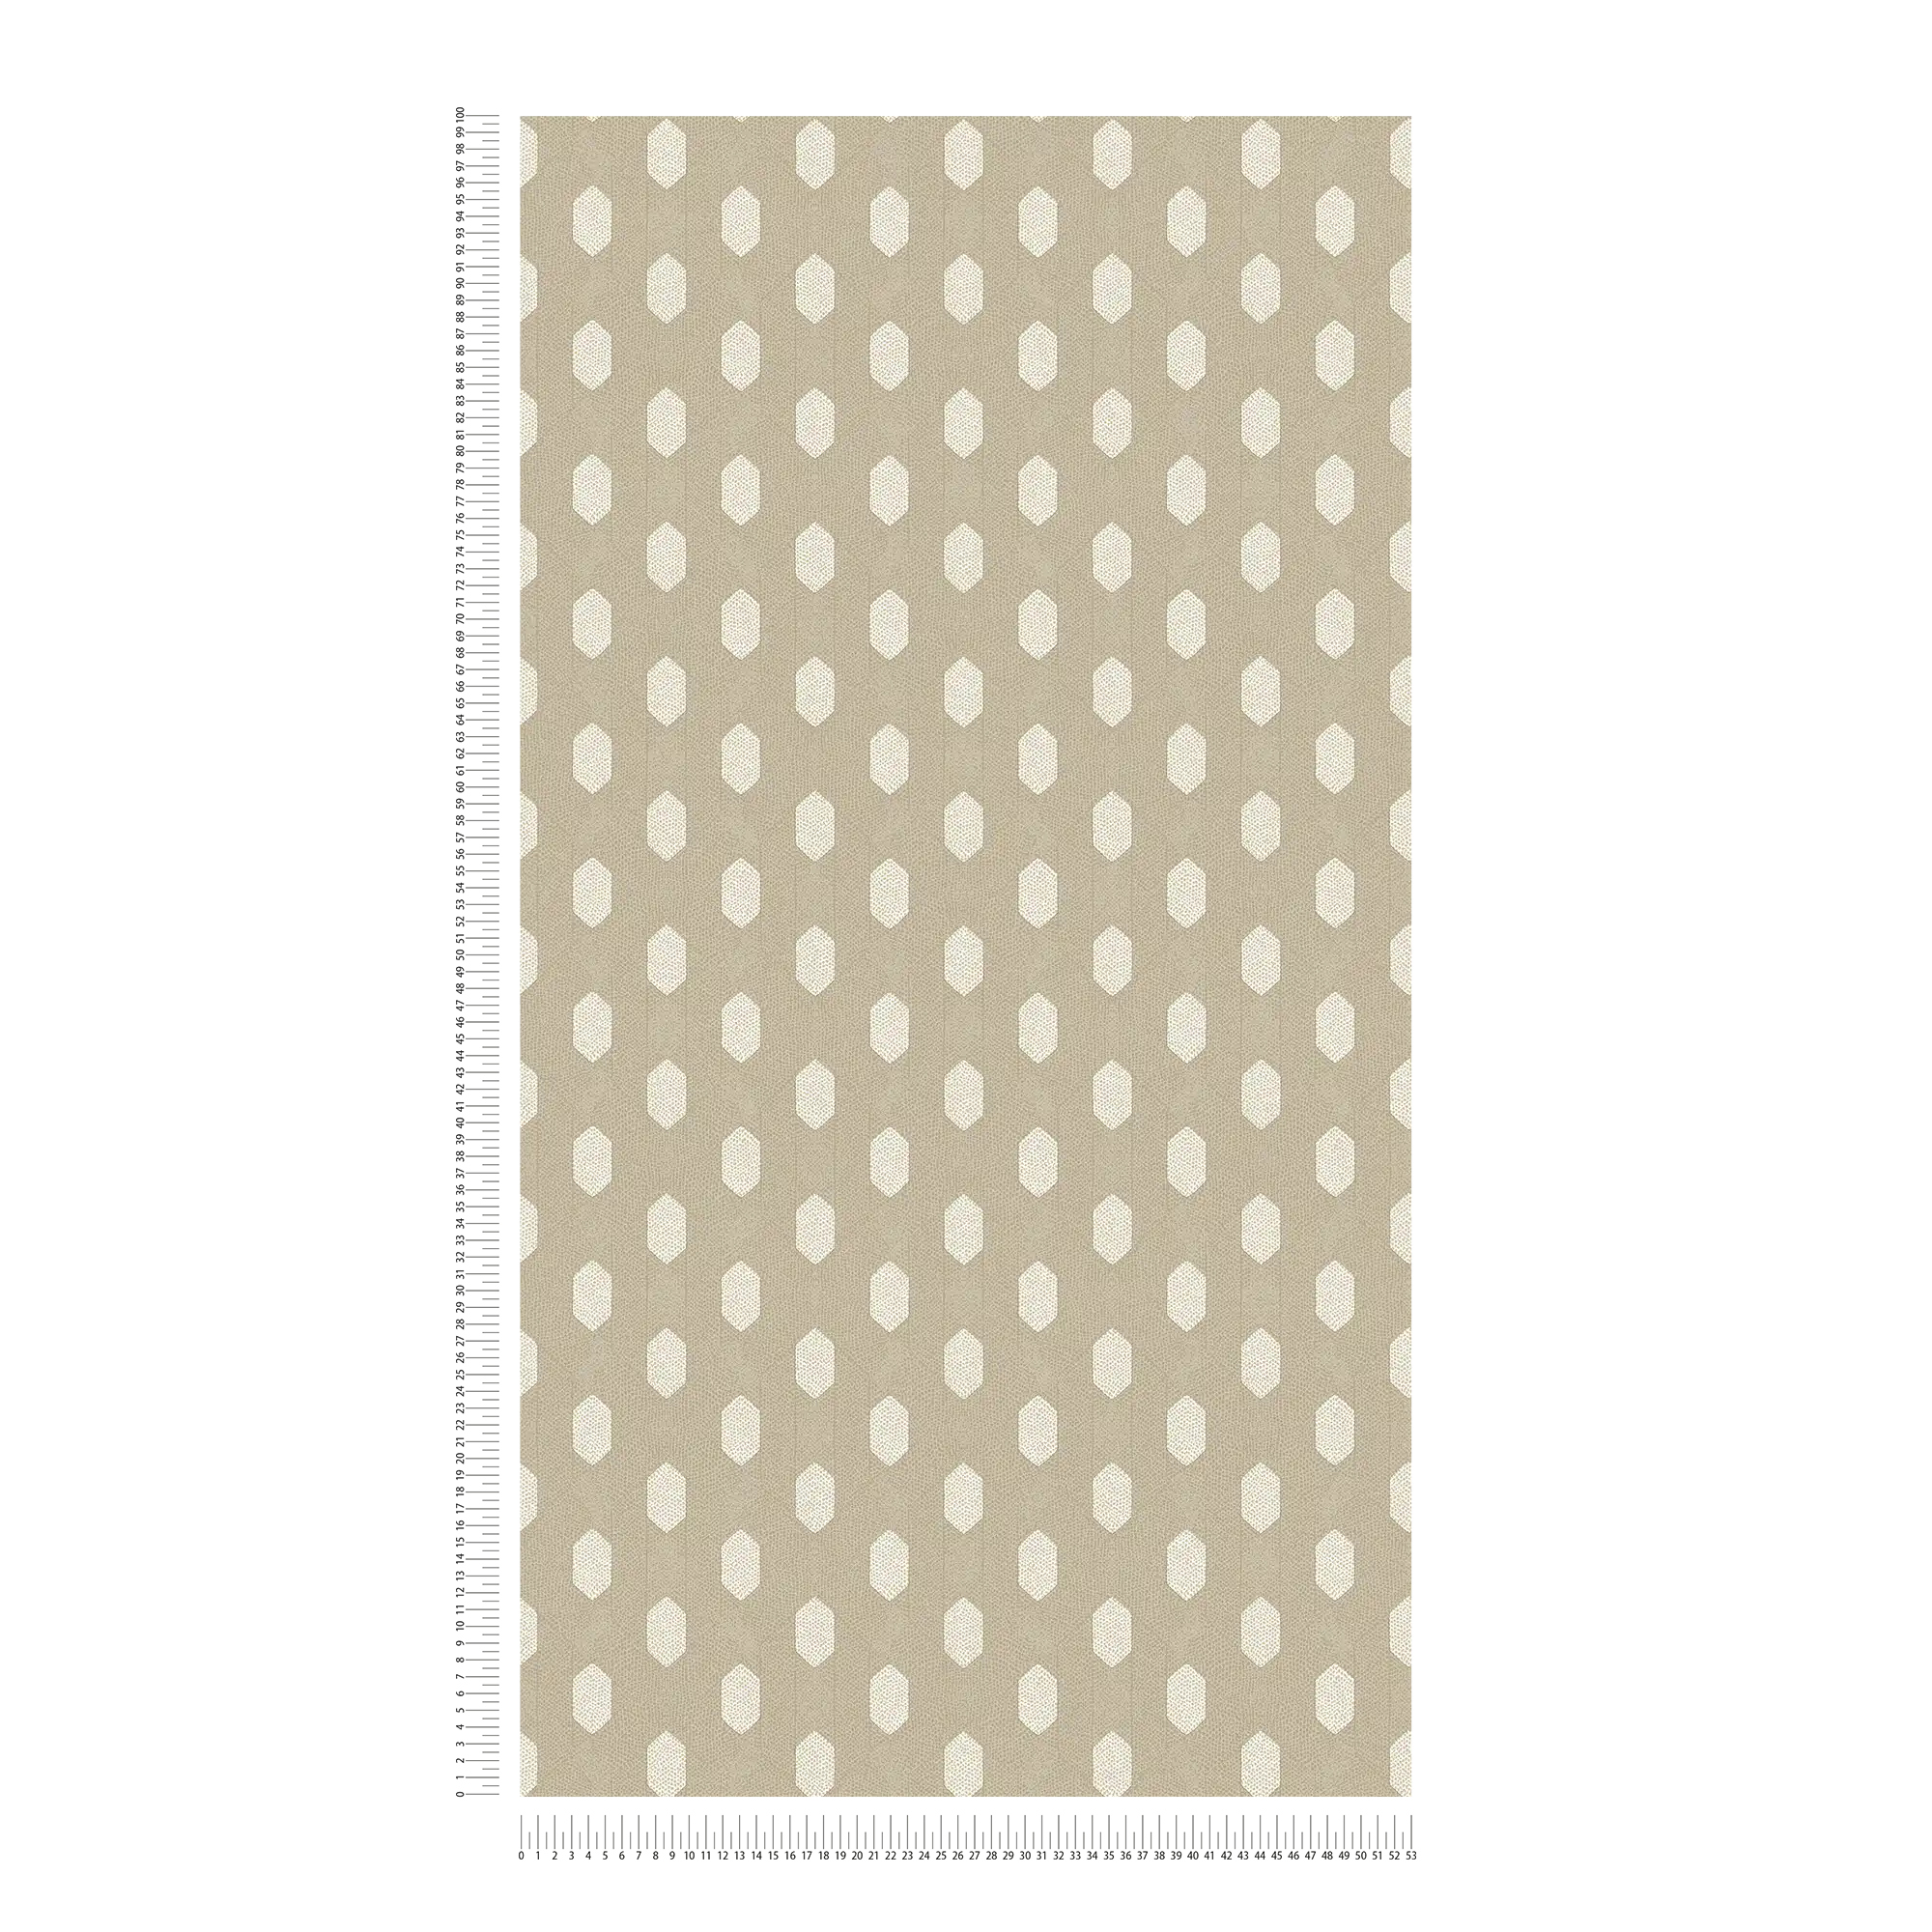             Beige non-woven wallpaper geometric pattern - cream, gold, beige
        